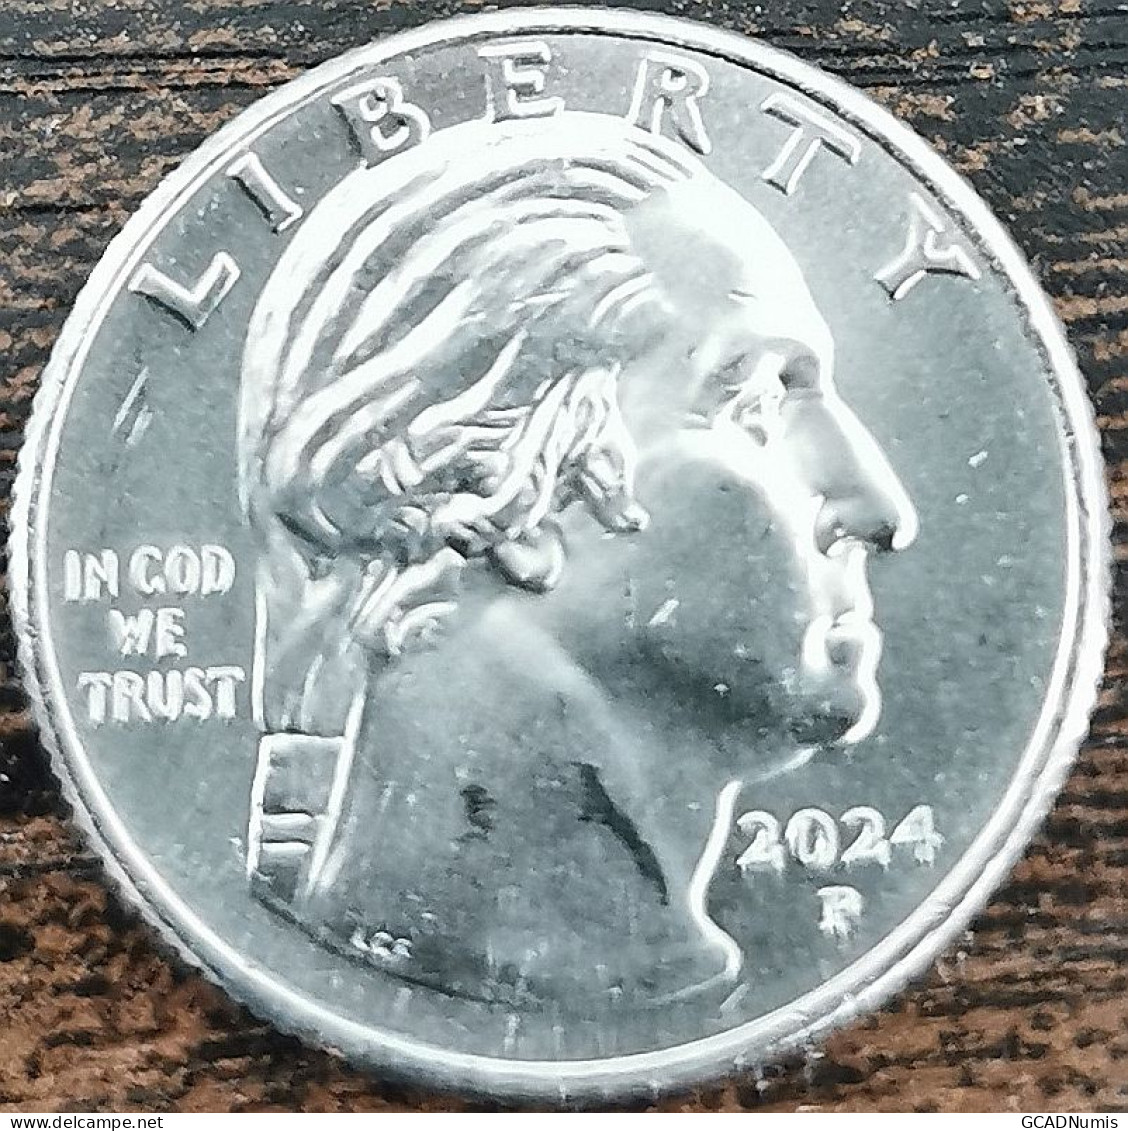 Quarter Dollar USA Patsy TAKEMOTO MINK - 2024 P - LIBERTY - American Woman - Unclassified